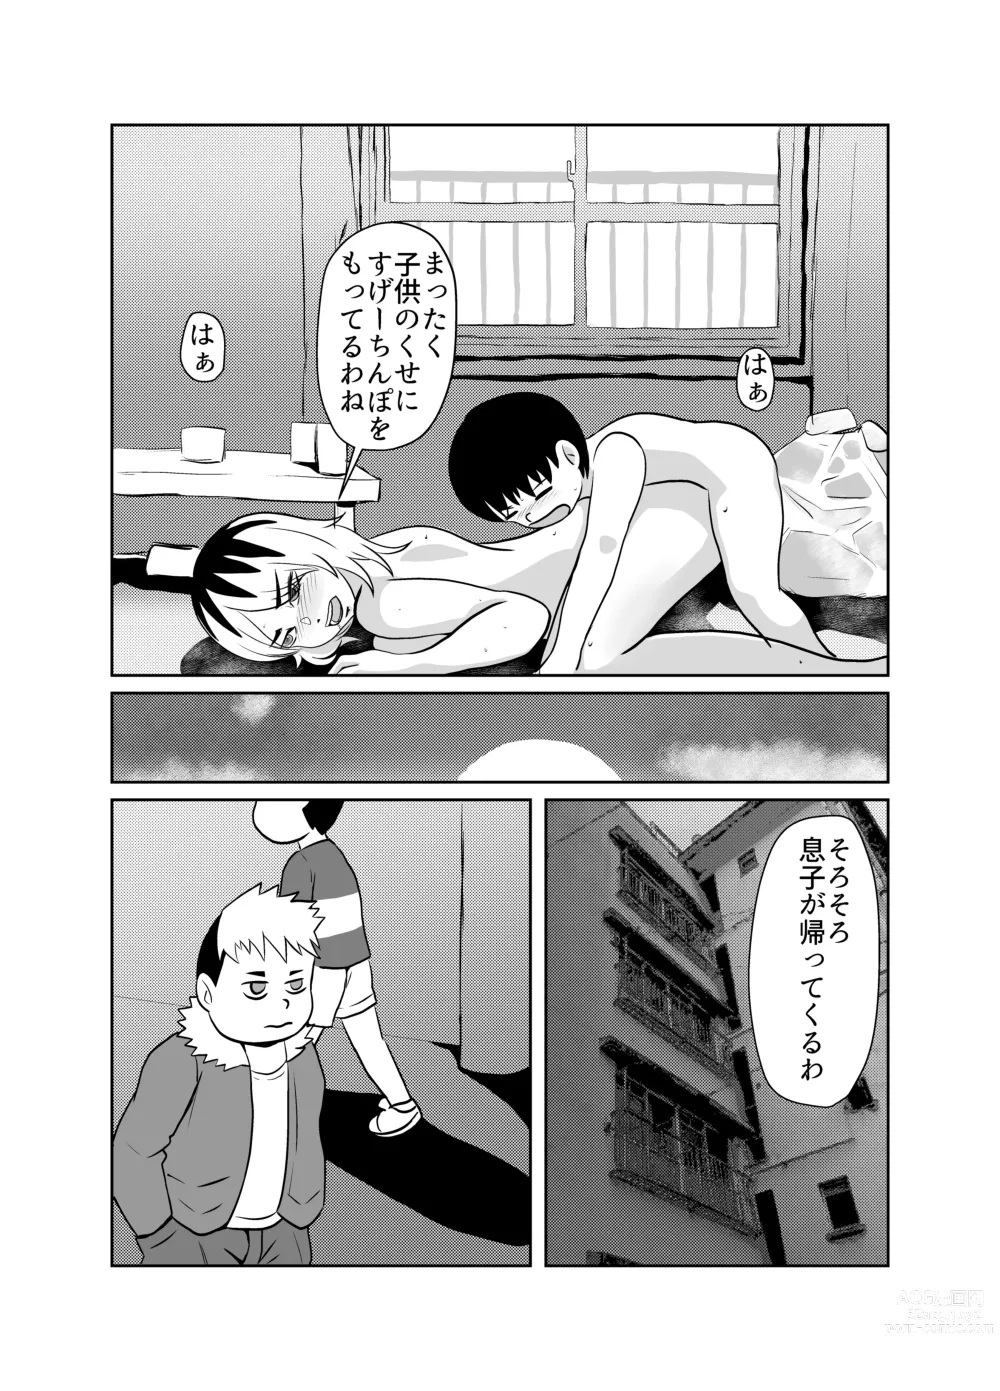 Page 6 of doujinshi Yuutousei no Hahaoya no Yowami o Nigitte NTR